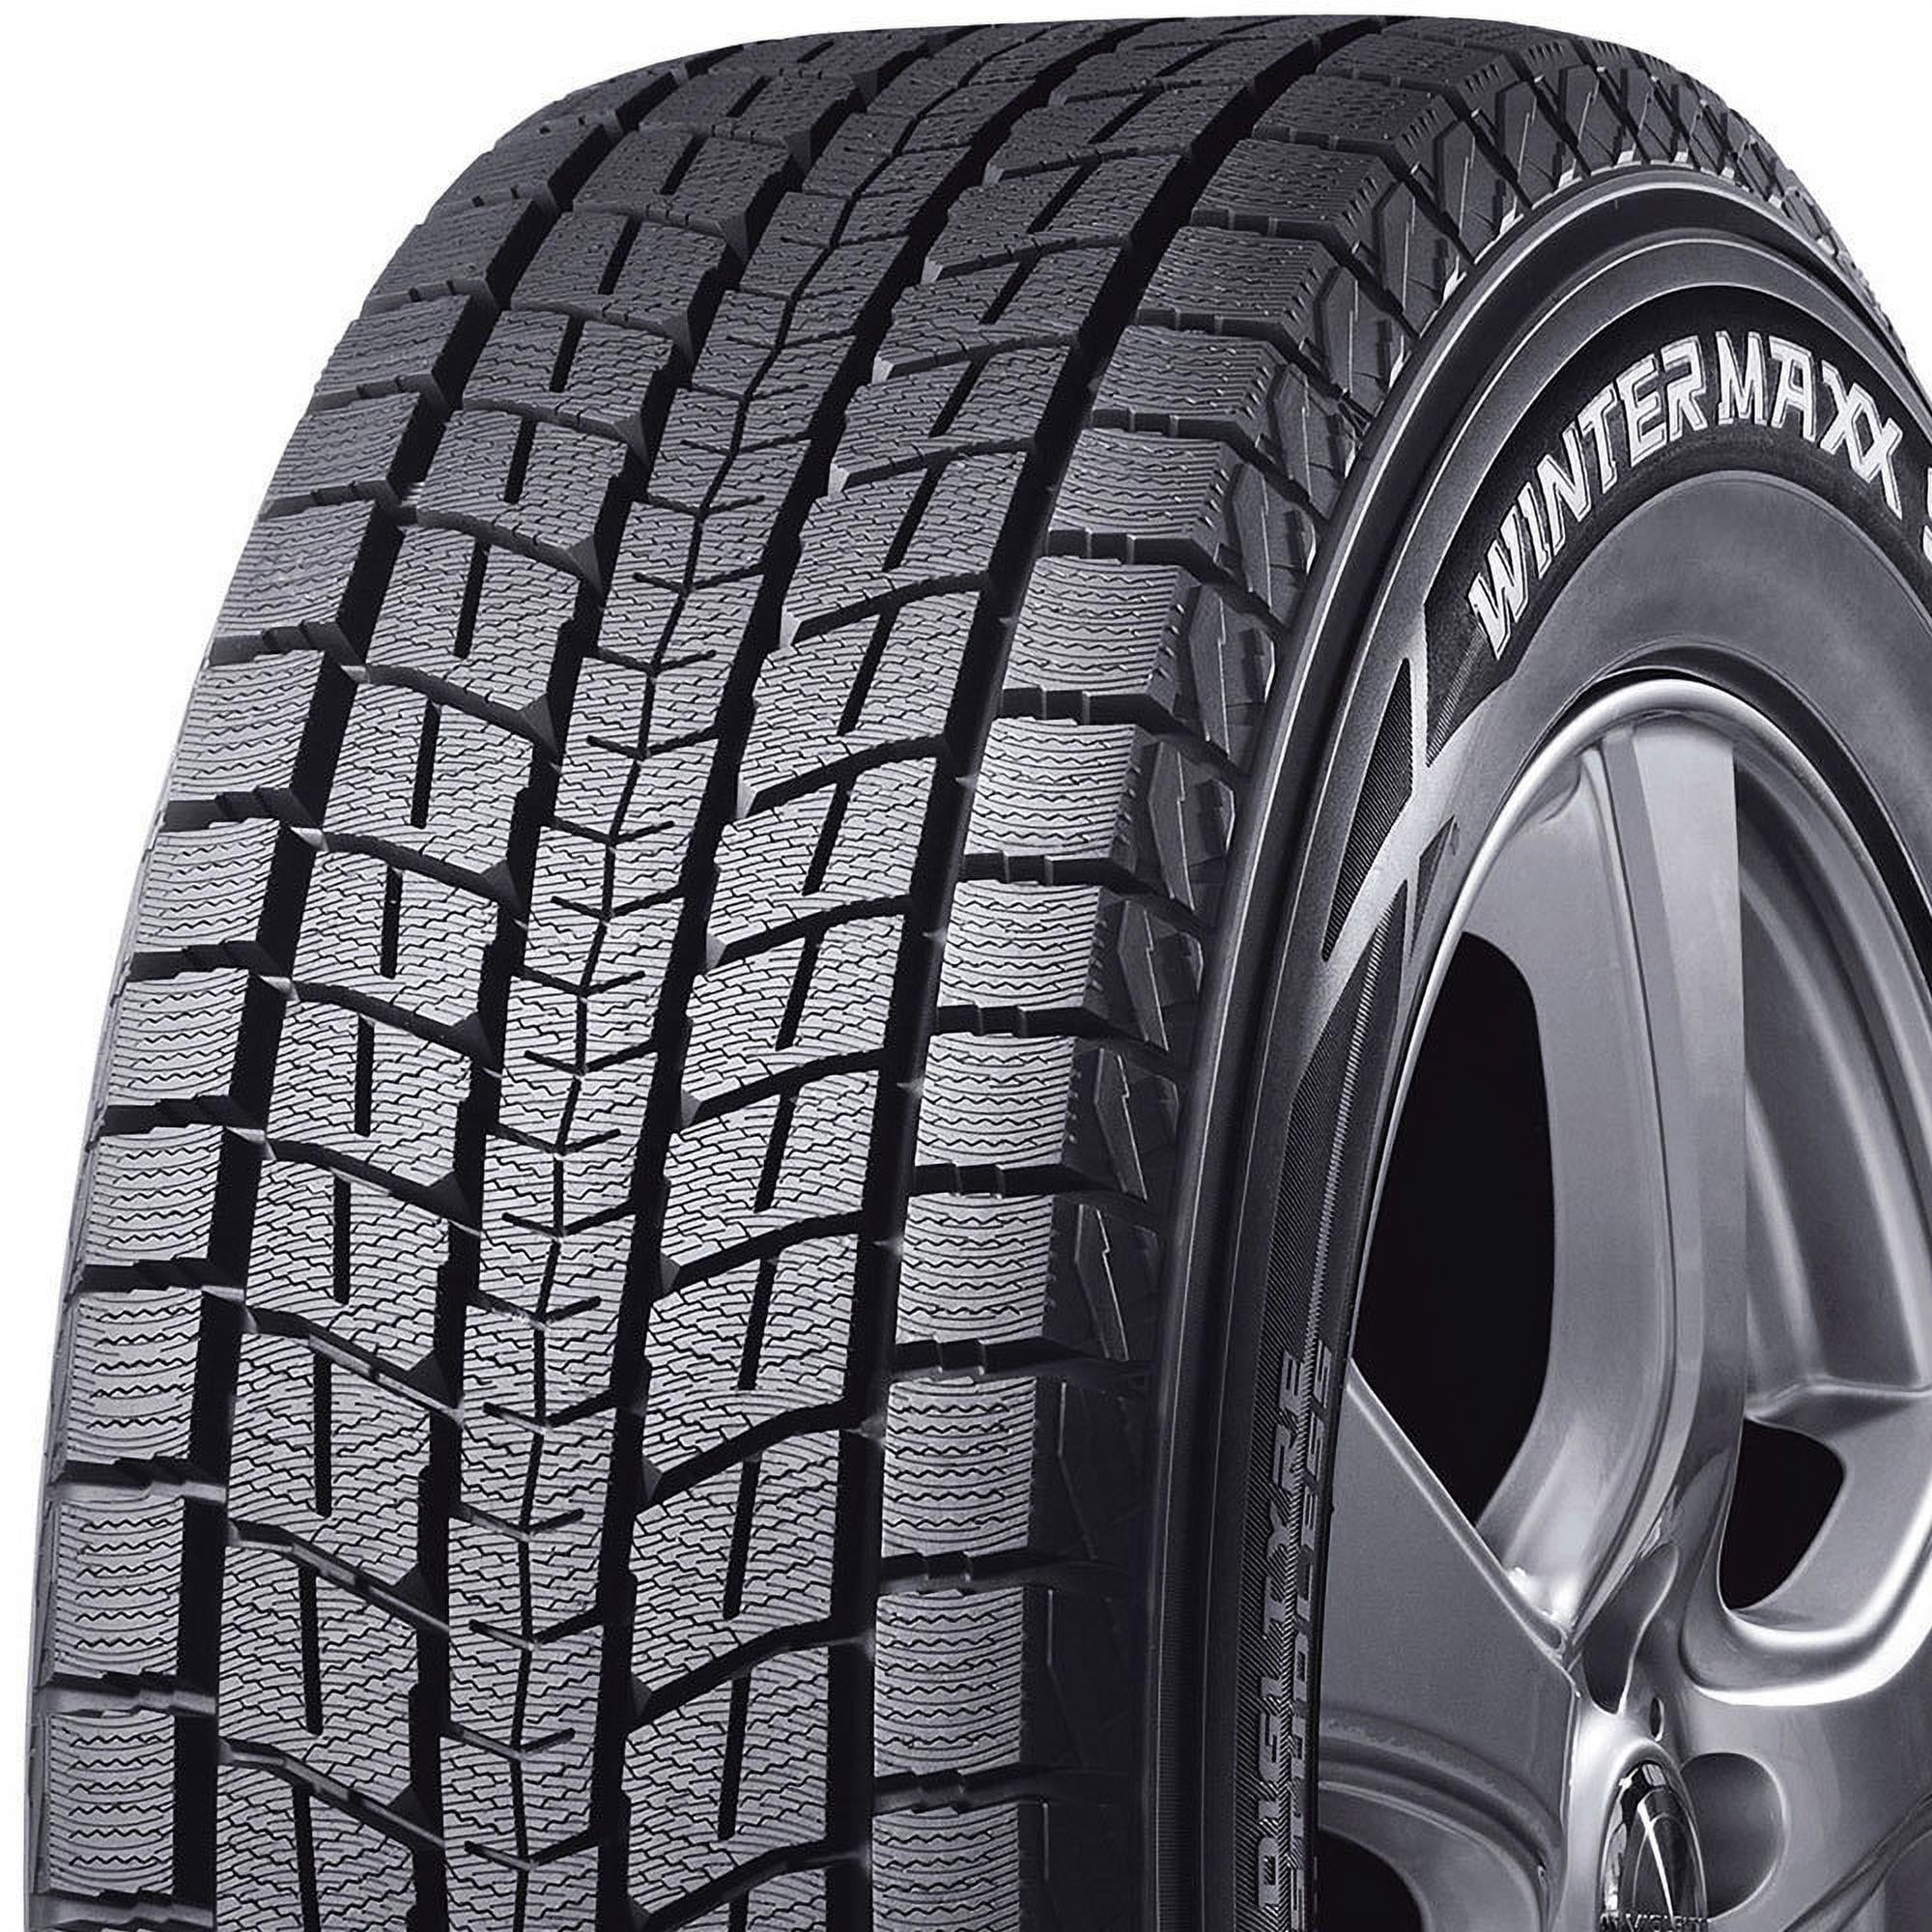 Dunlop winter maxx sj8 PR R bsw winter tire